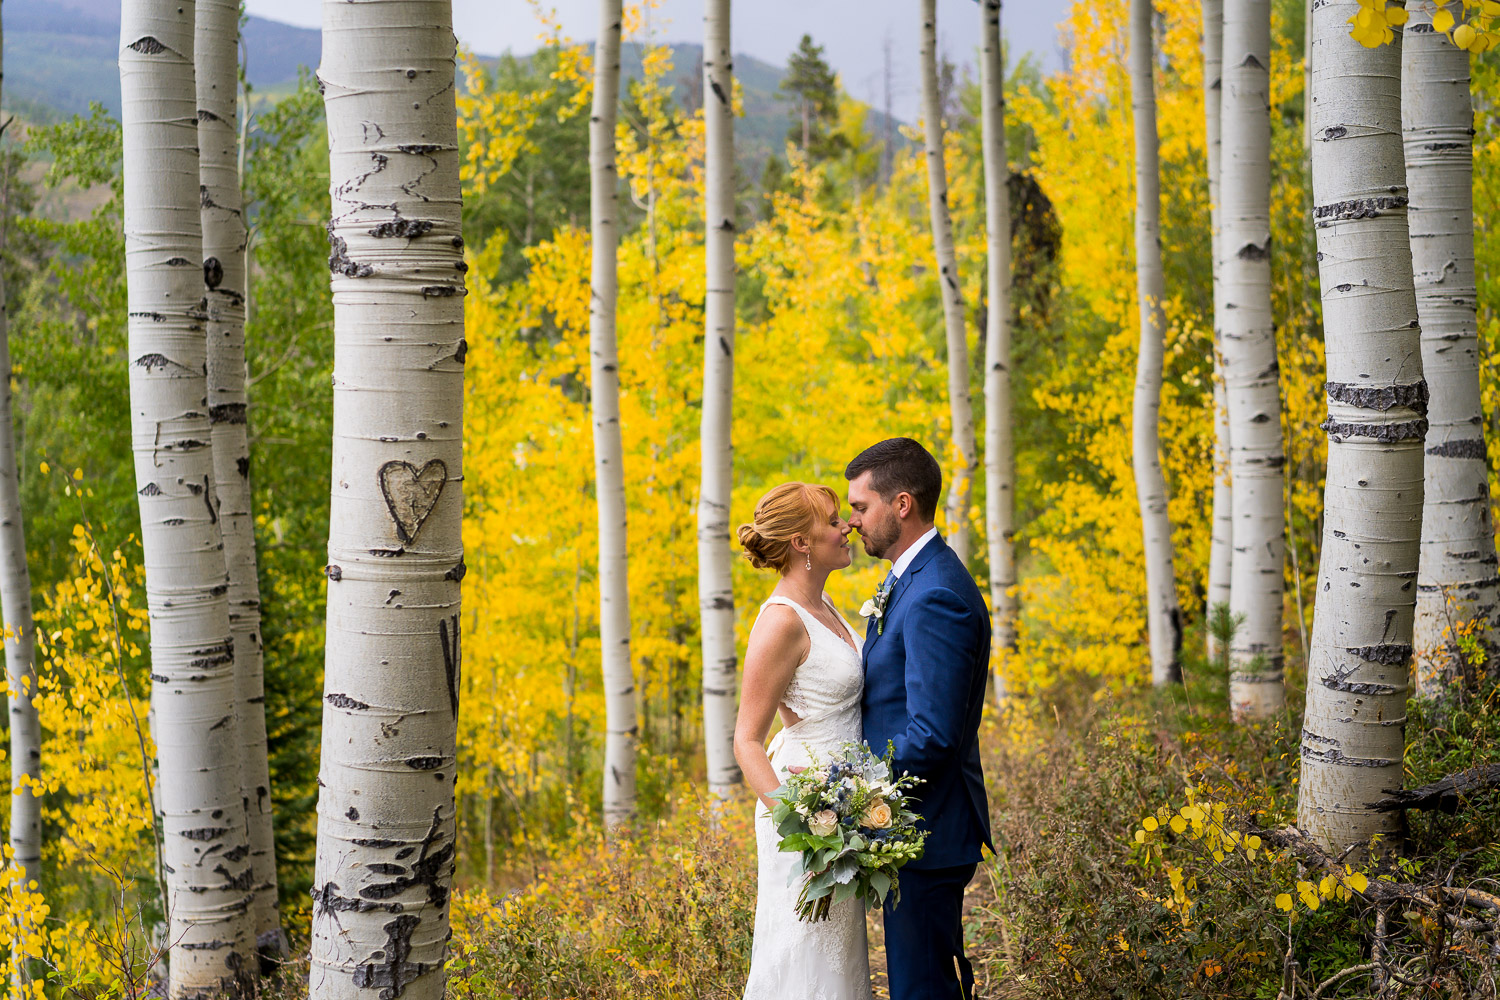 Vail Wedding Deck Fall Couple Portraits in Aspen Trees | Vail wedding photographers